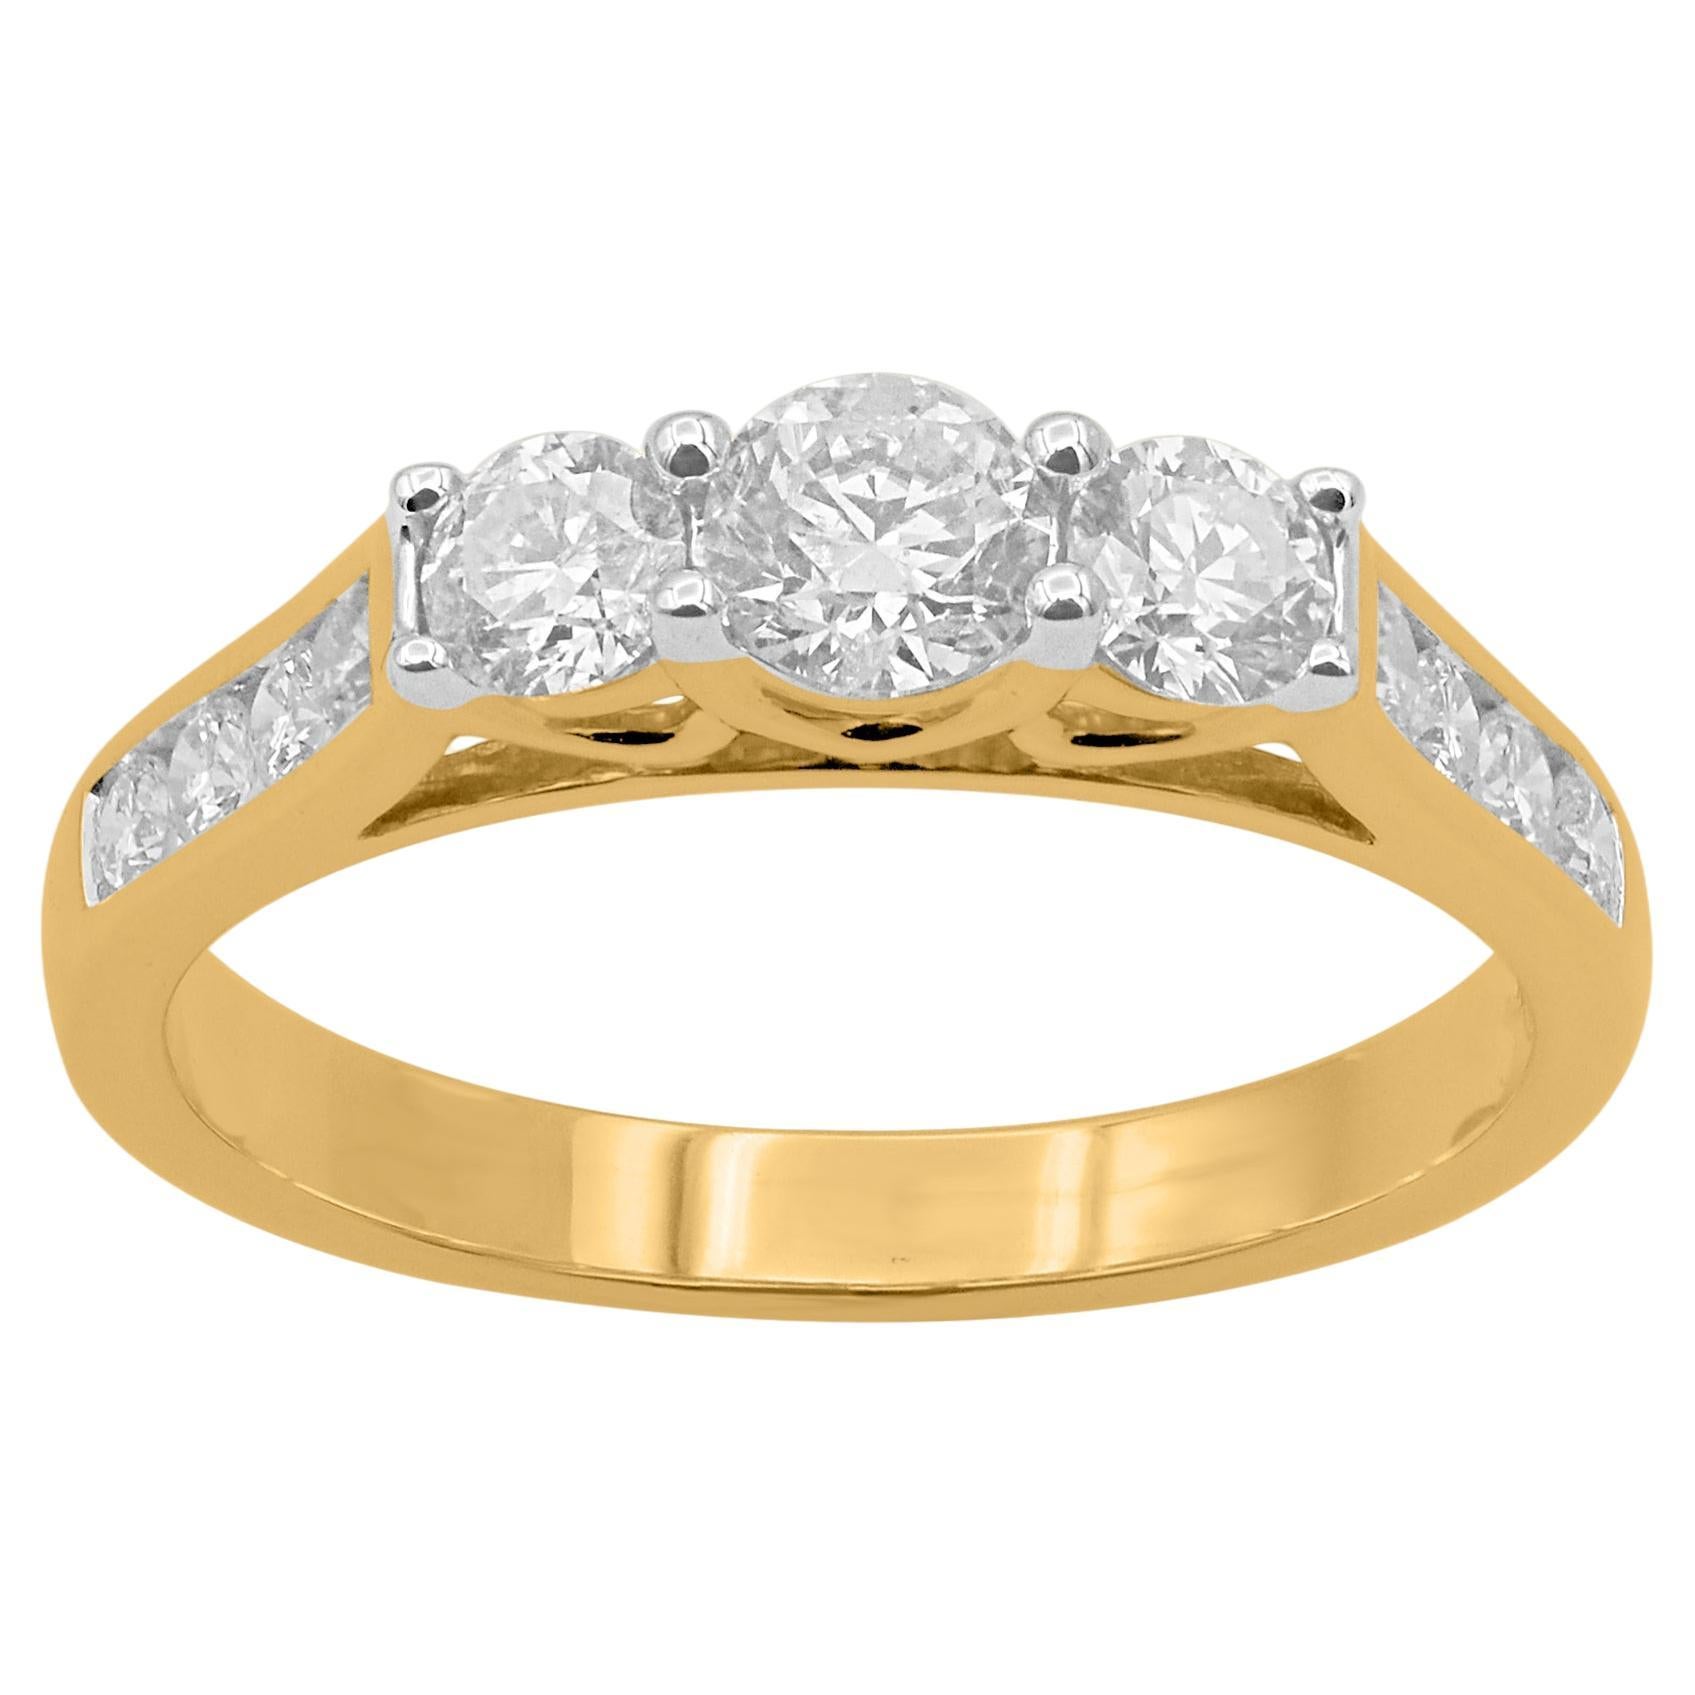 TJD 1.0 Carat Brilliant Cut Diamond Three Stone Wedding Ring 14KT Yellow Gold